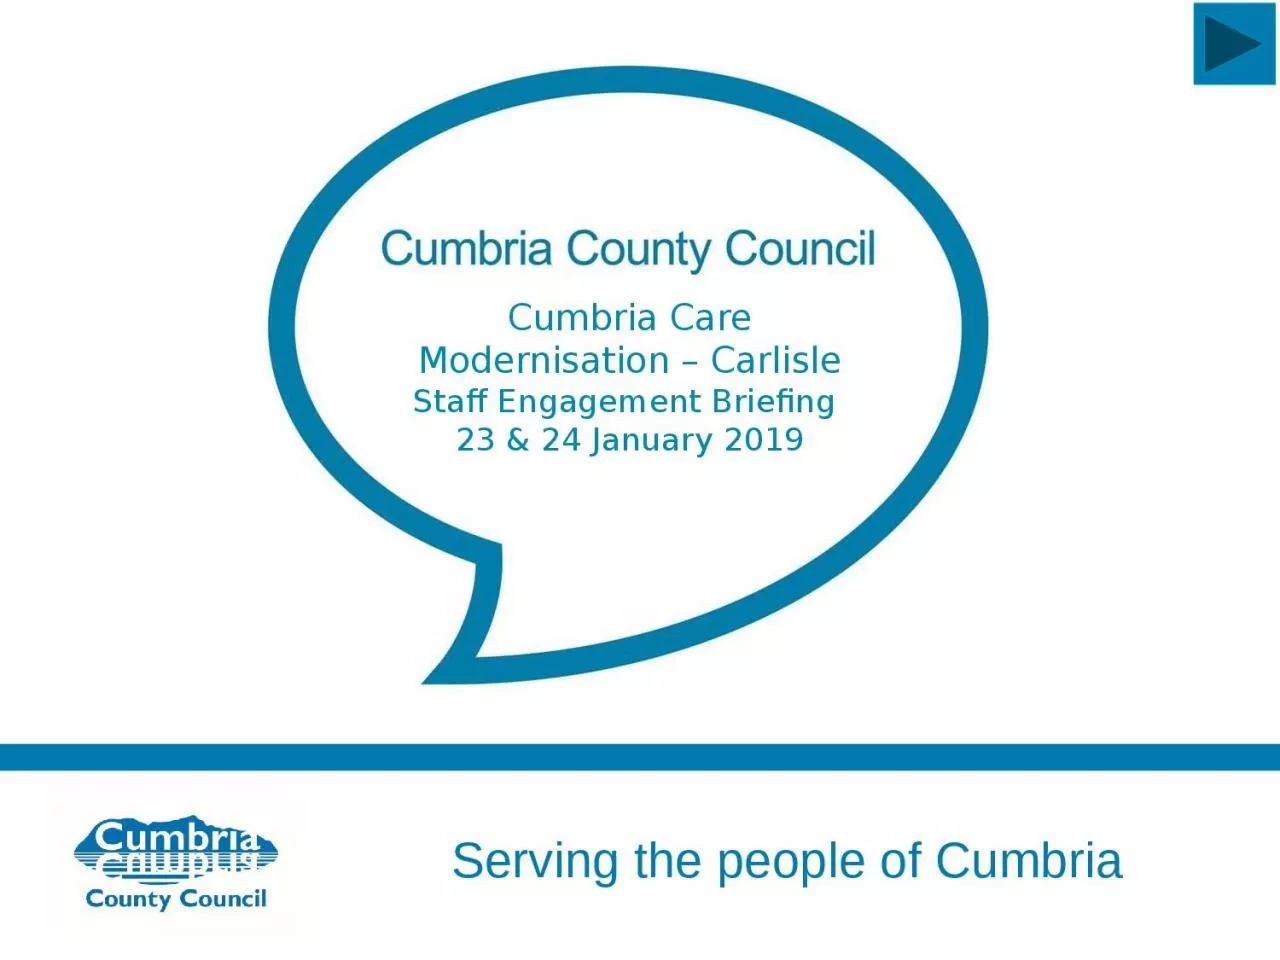 Cumbria Care Modernisation – Carlisle